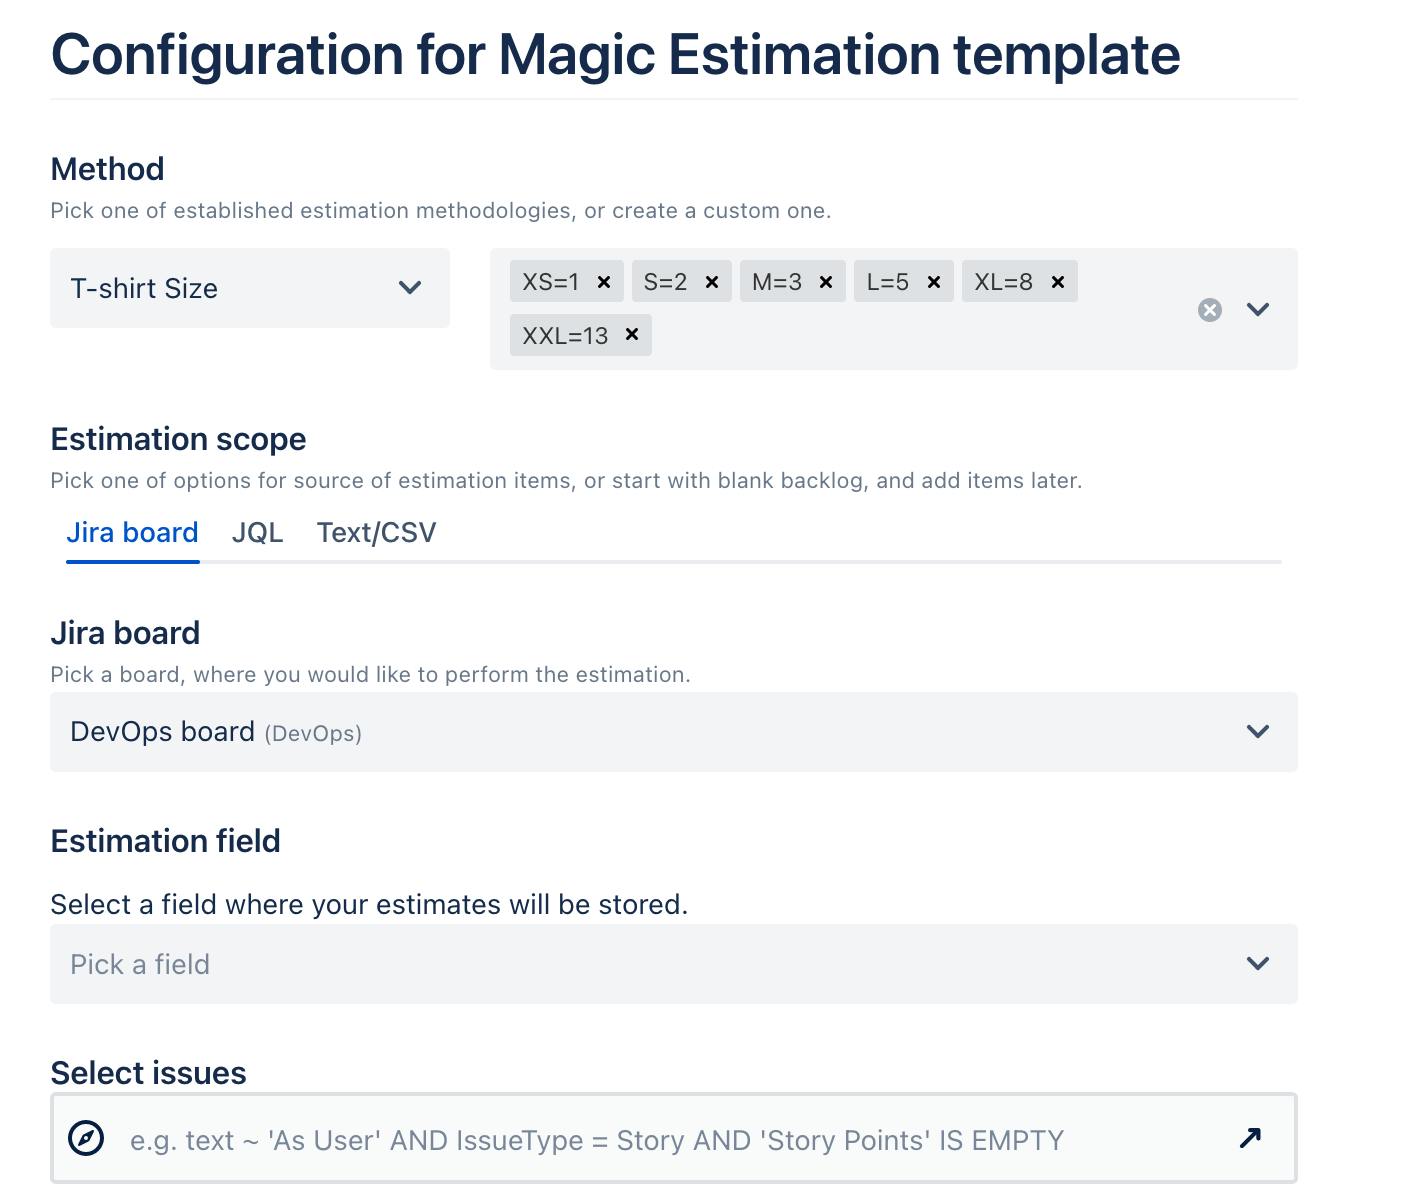 magic estimation template configuration